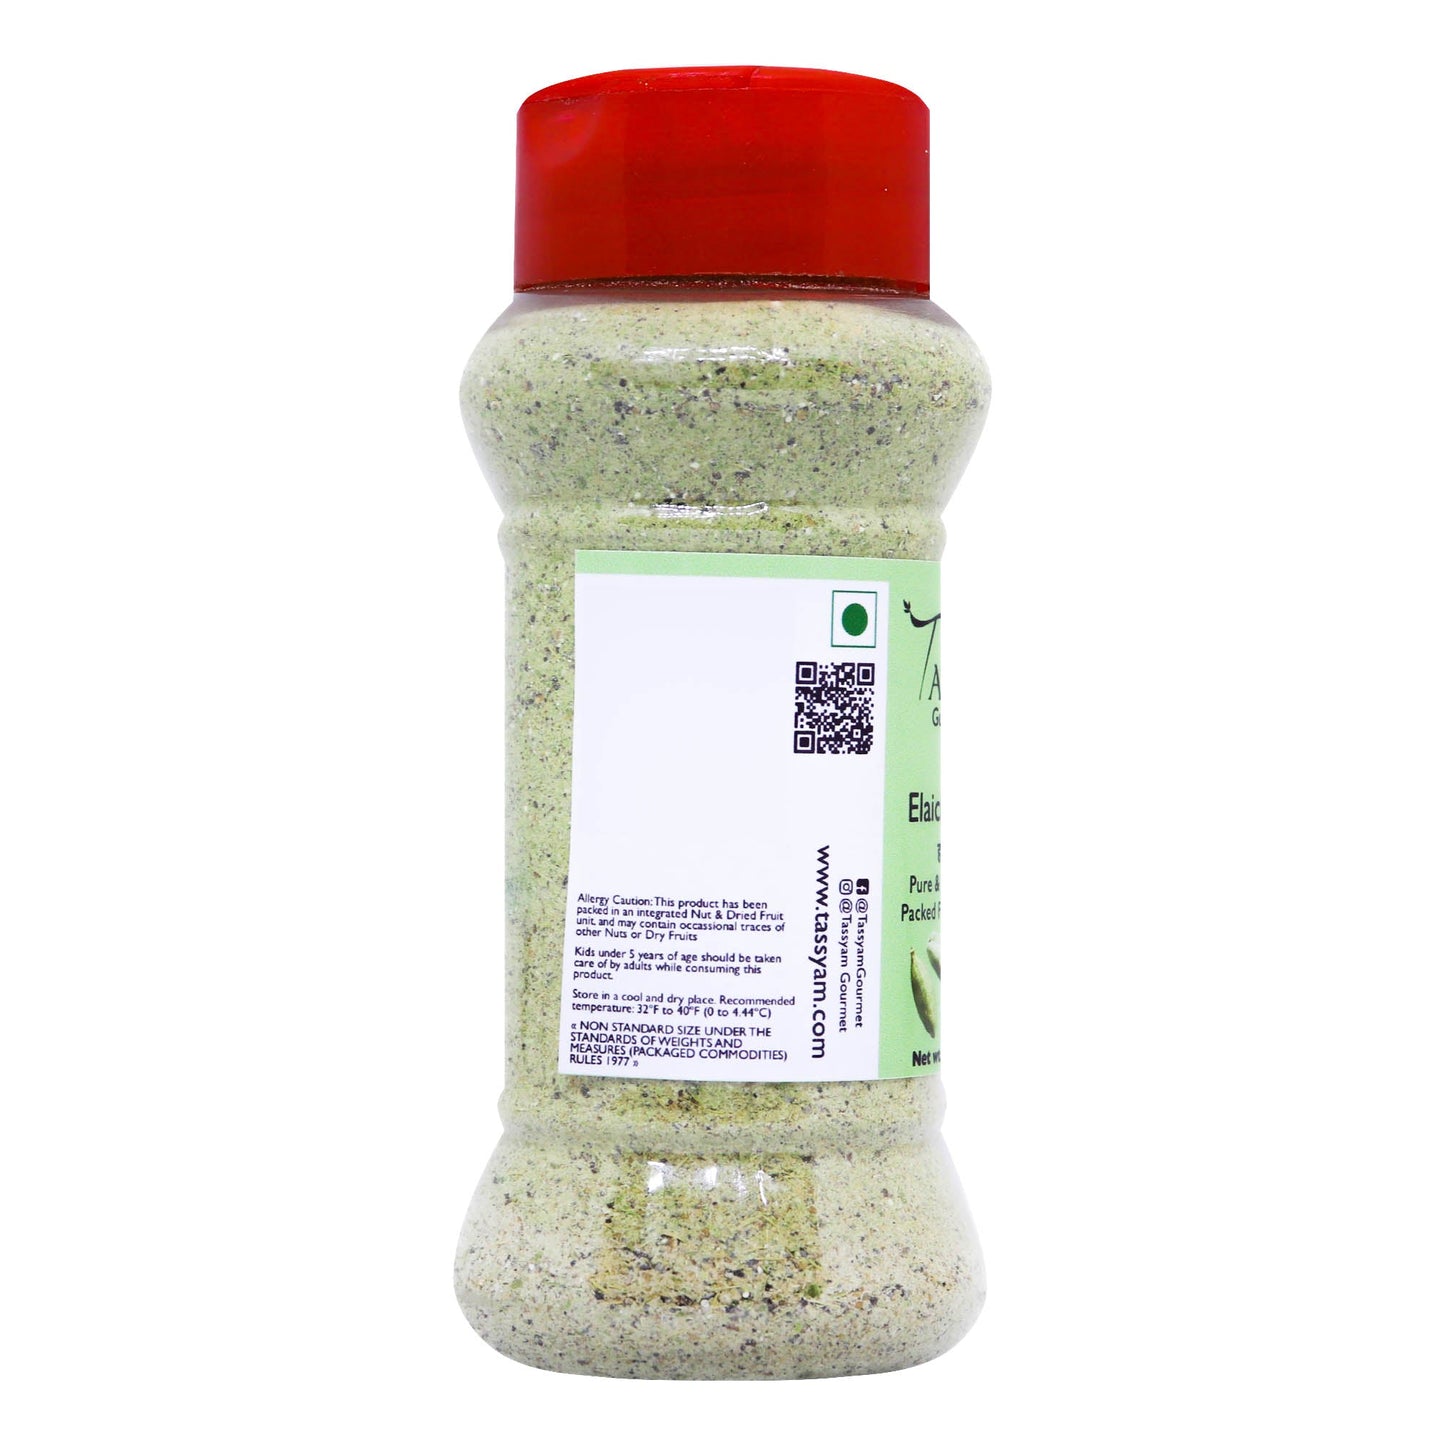 Premium Elaichi Powder 80g - Tassyam Organics